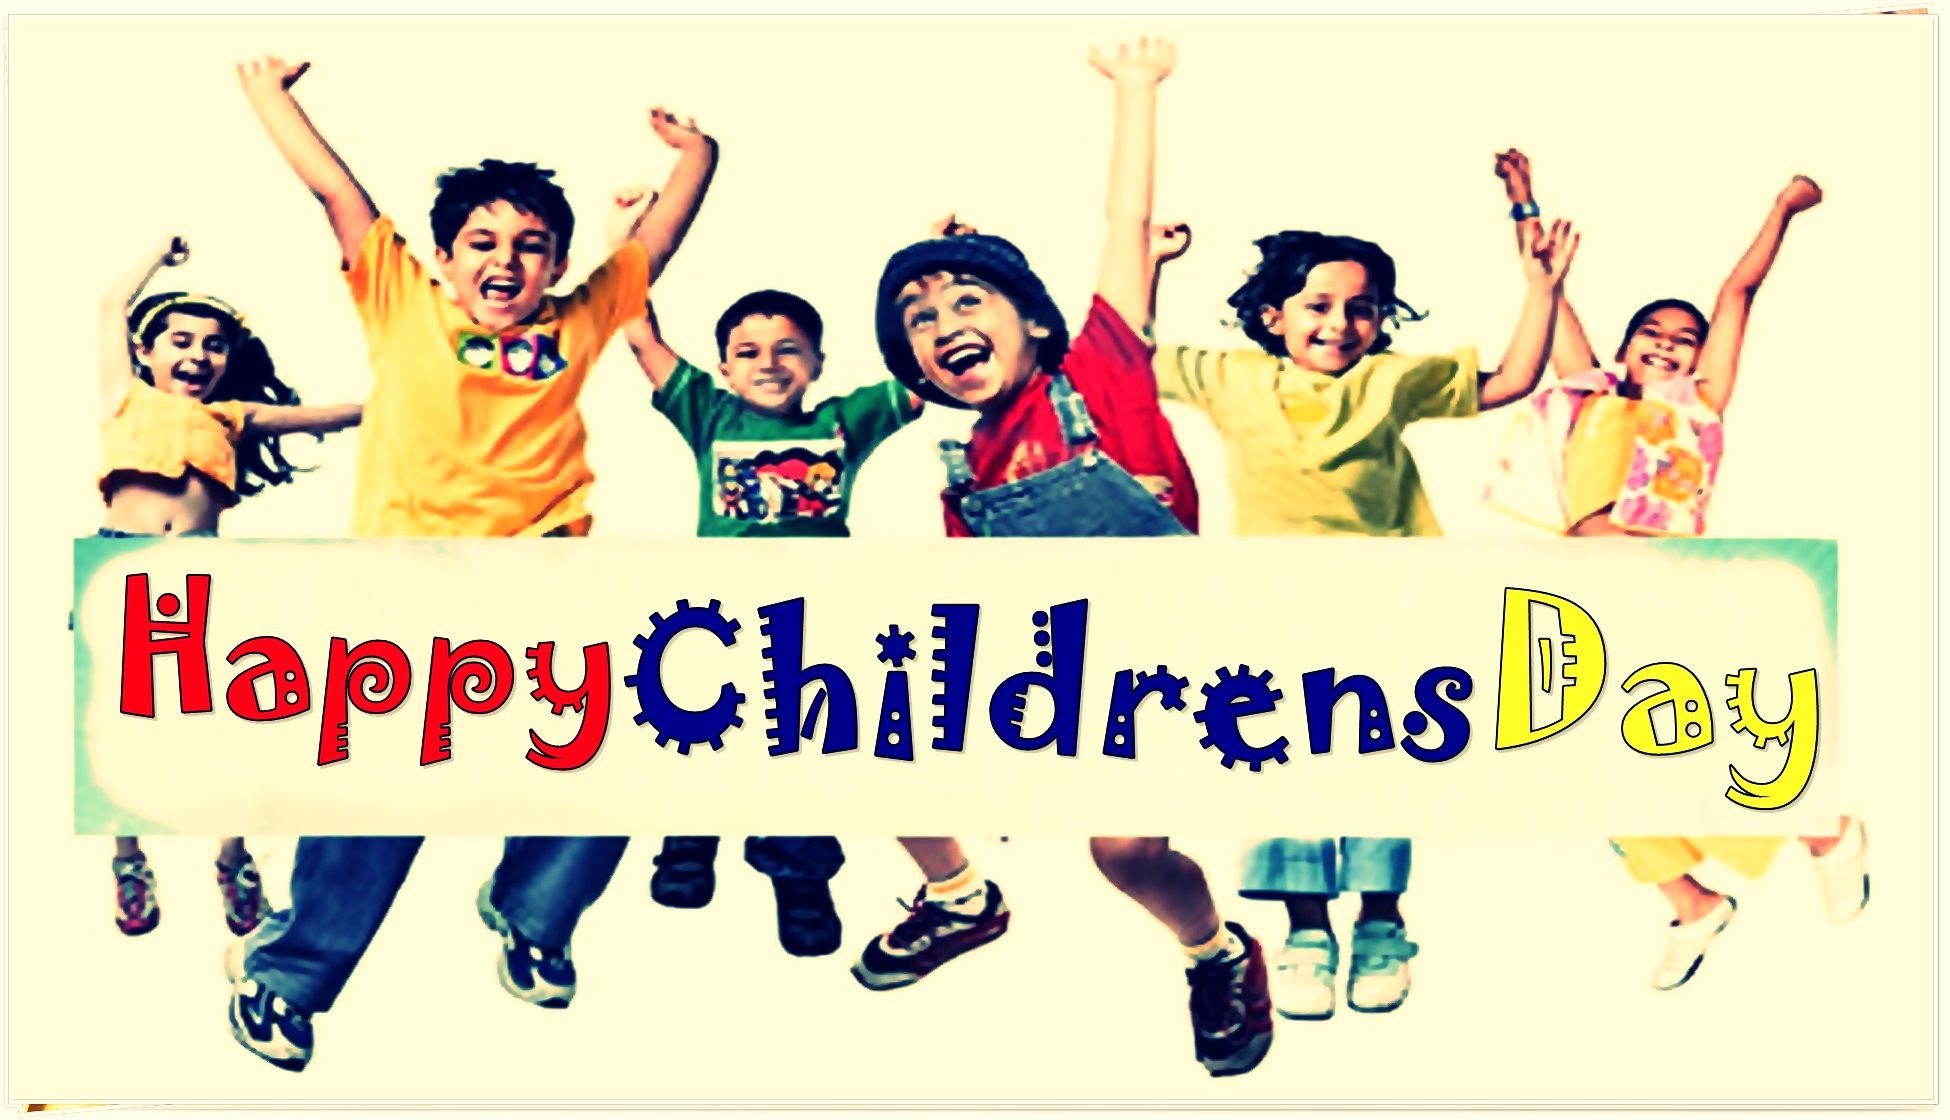 Happy Children's Day Images Hd - 1950x1120 Wallpaper 